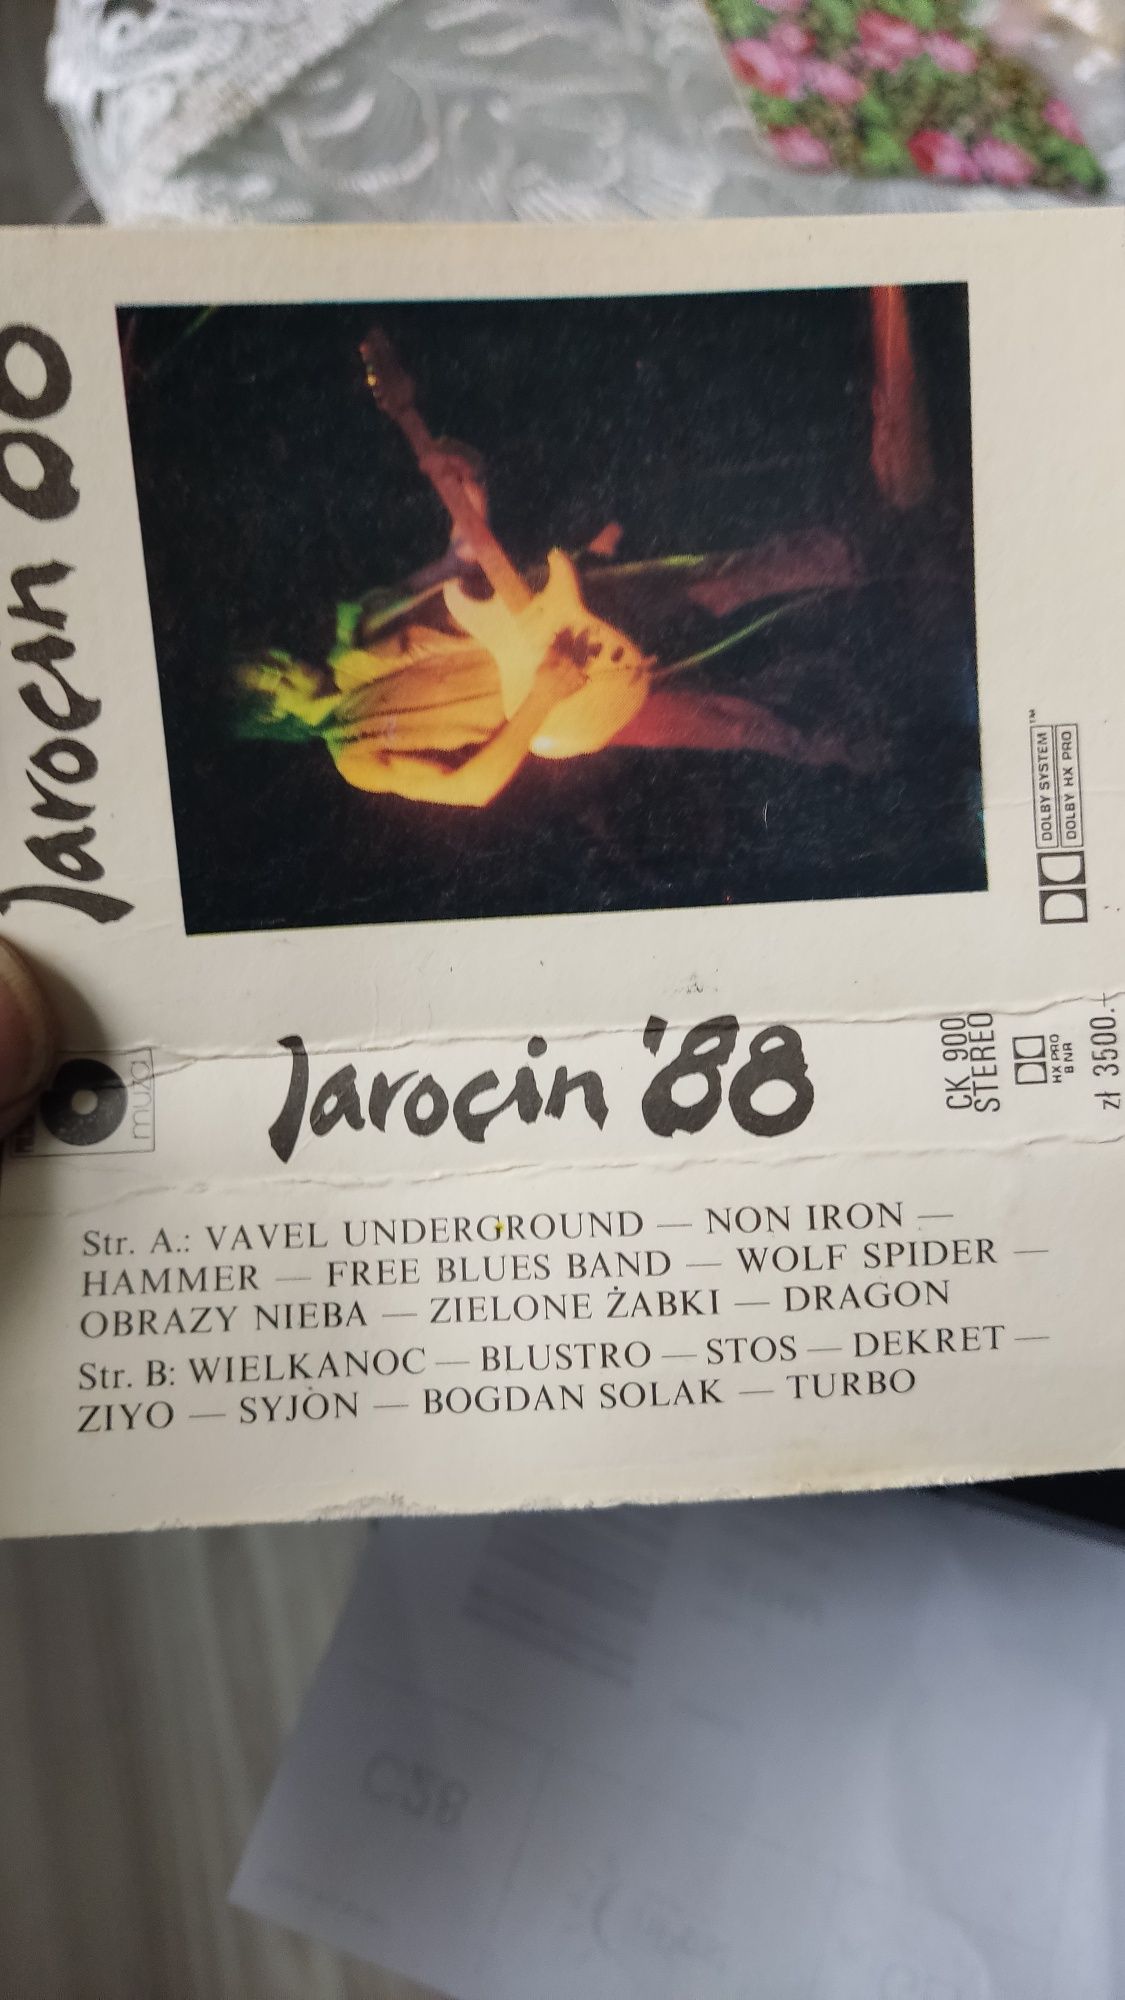 Jarocin 88 Turbo Zyio Zielone Żabki Non Iron kaseta audio